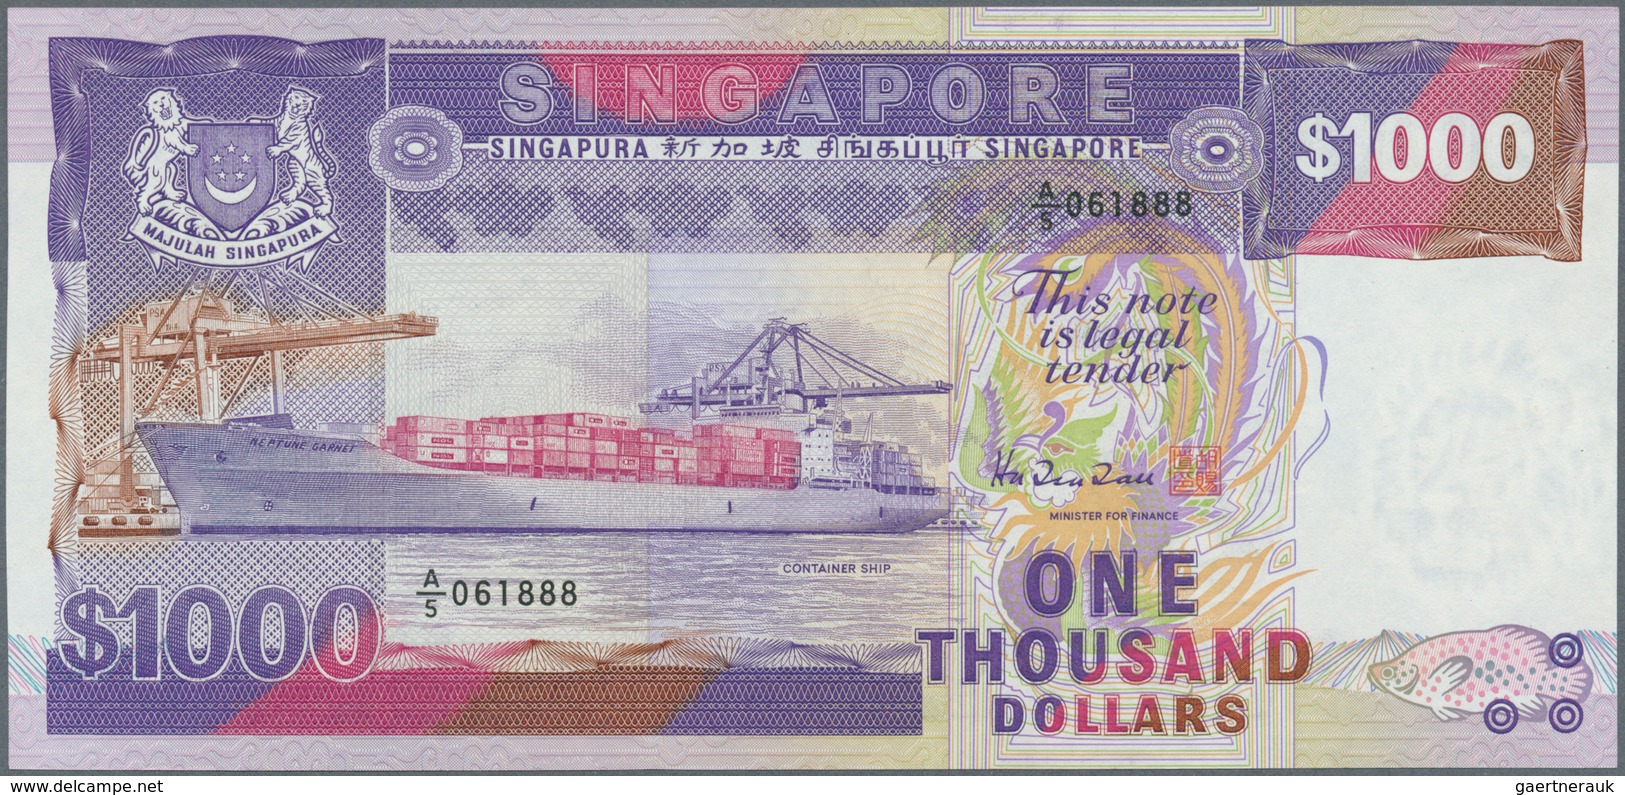 02368 Singapore / Singapur: 1000 Dollars ND P. 25 In Condition: UNC. - Singapore